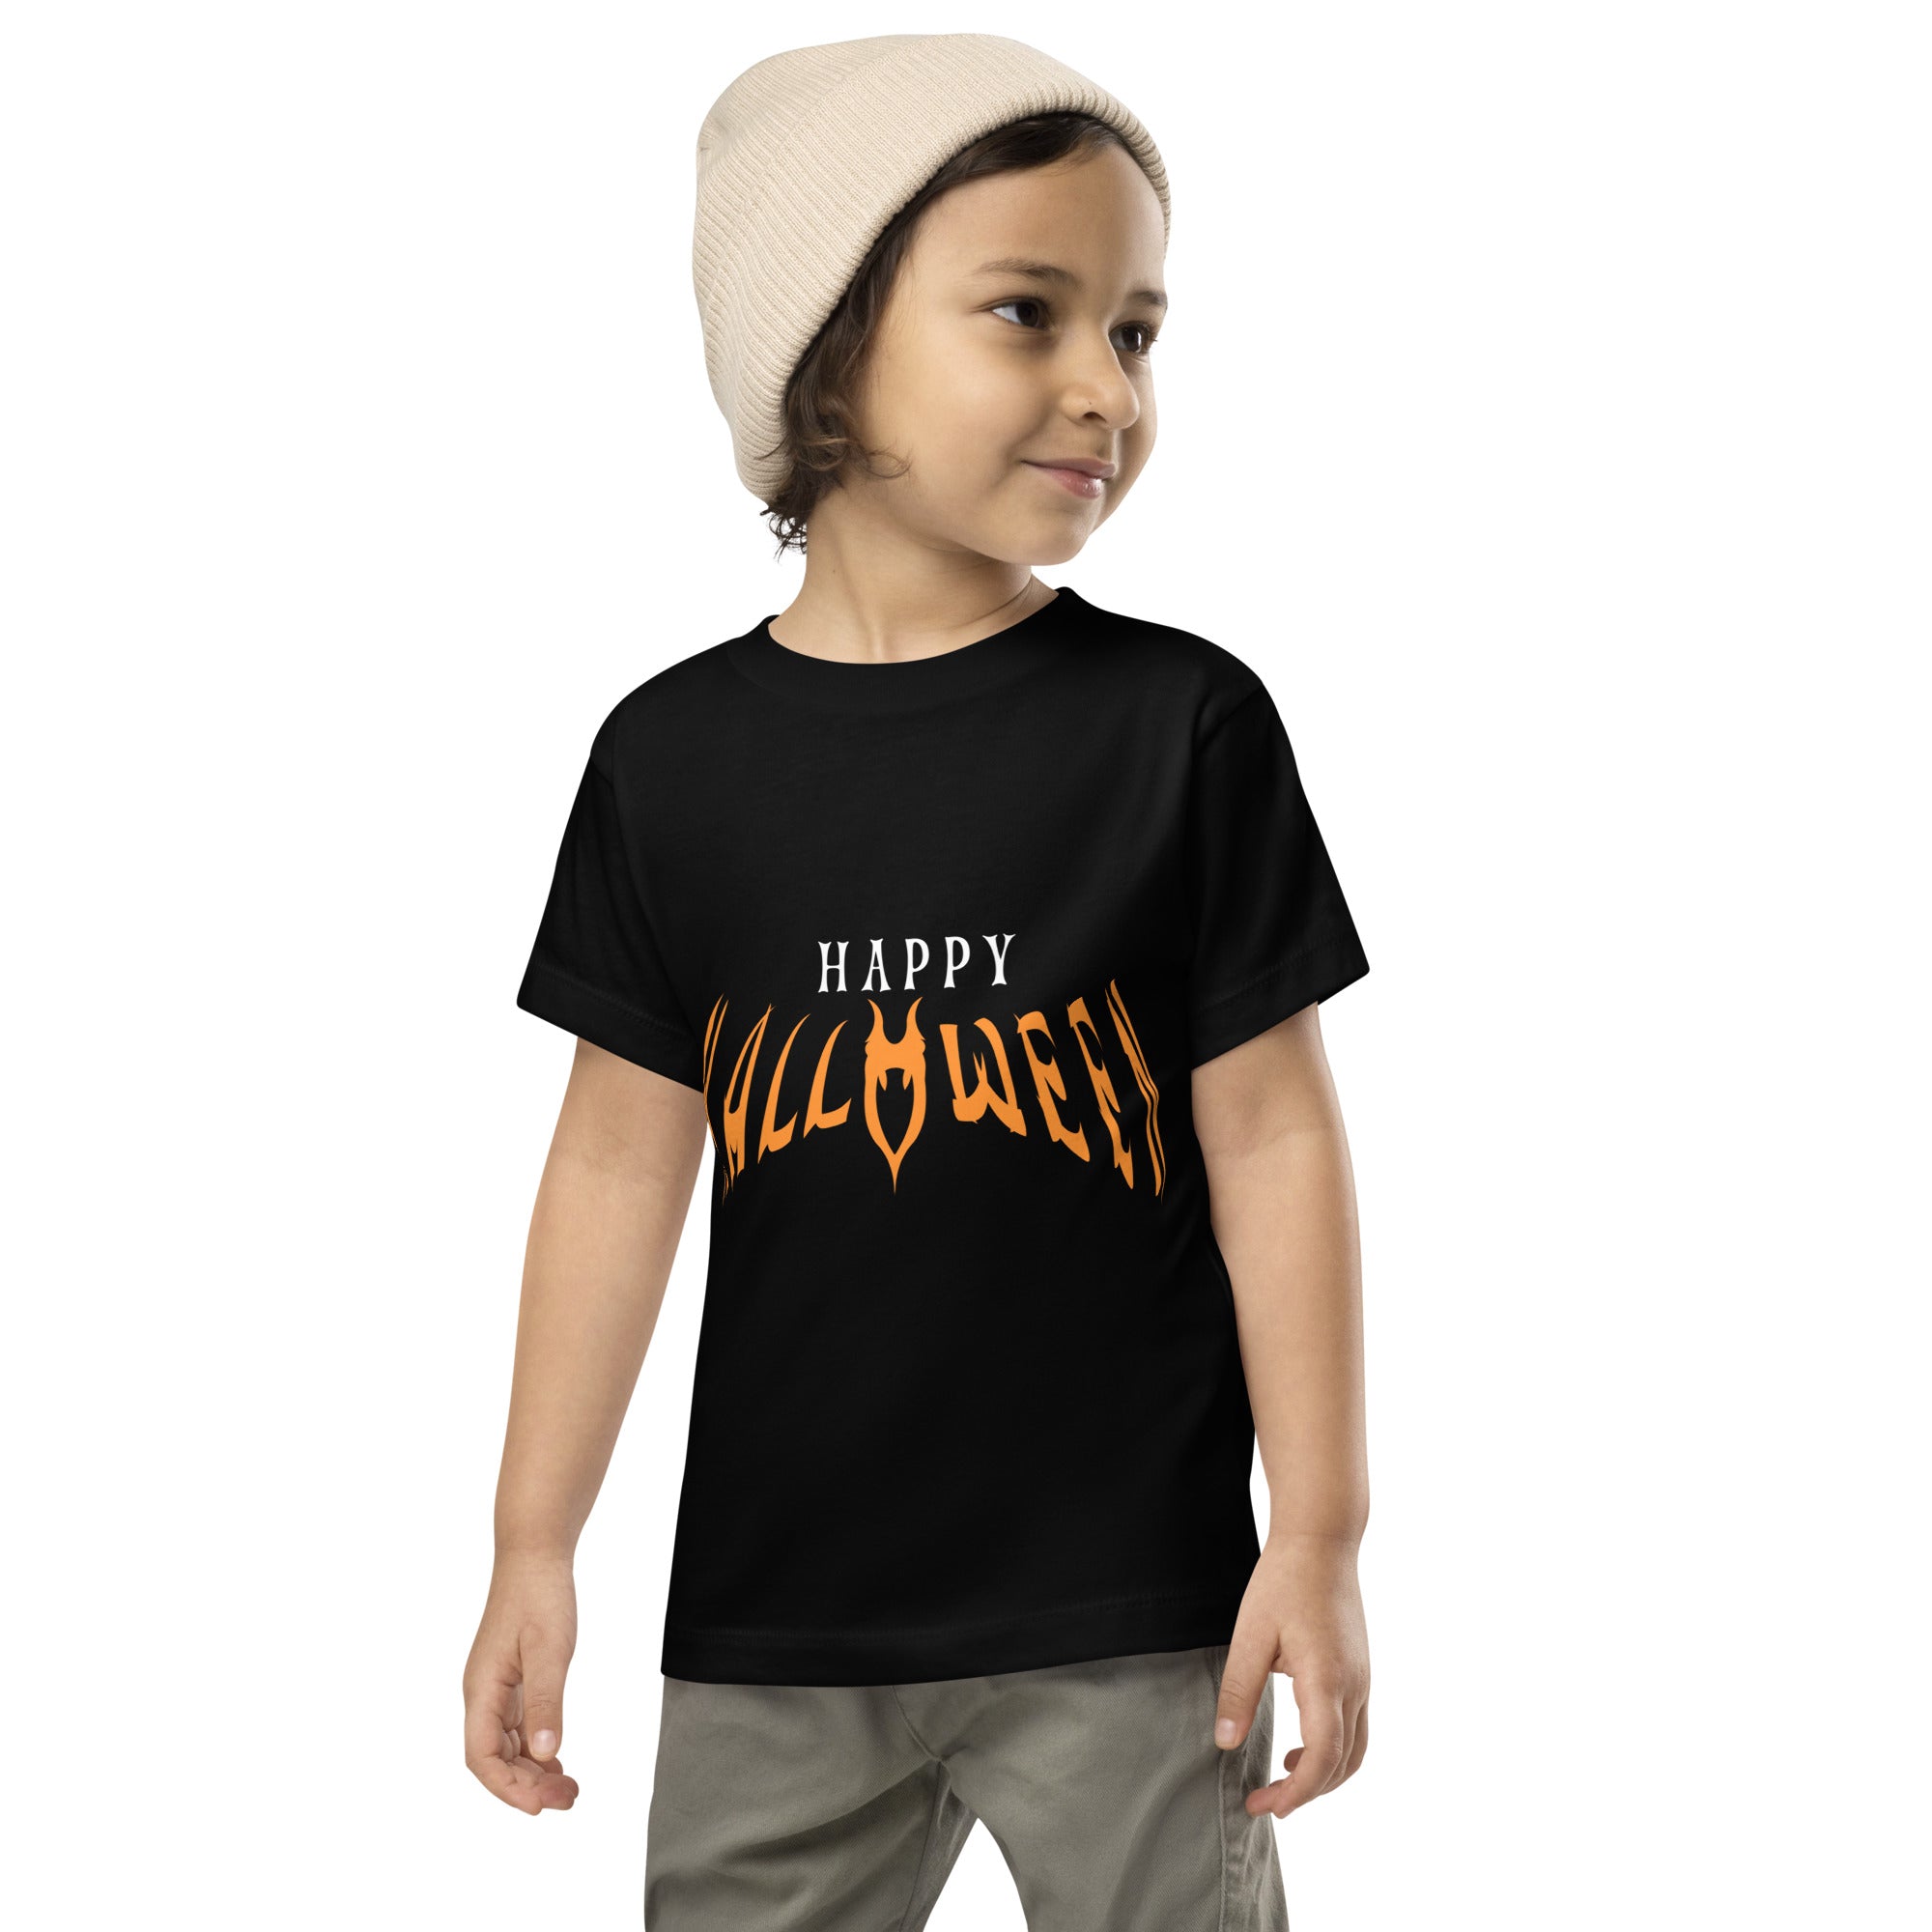 Happy Halloween Kid's T-Shirt